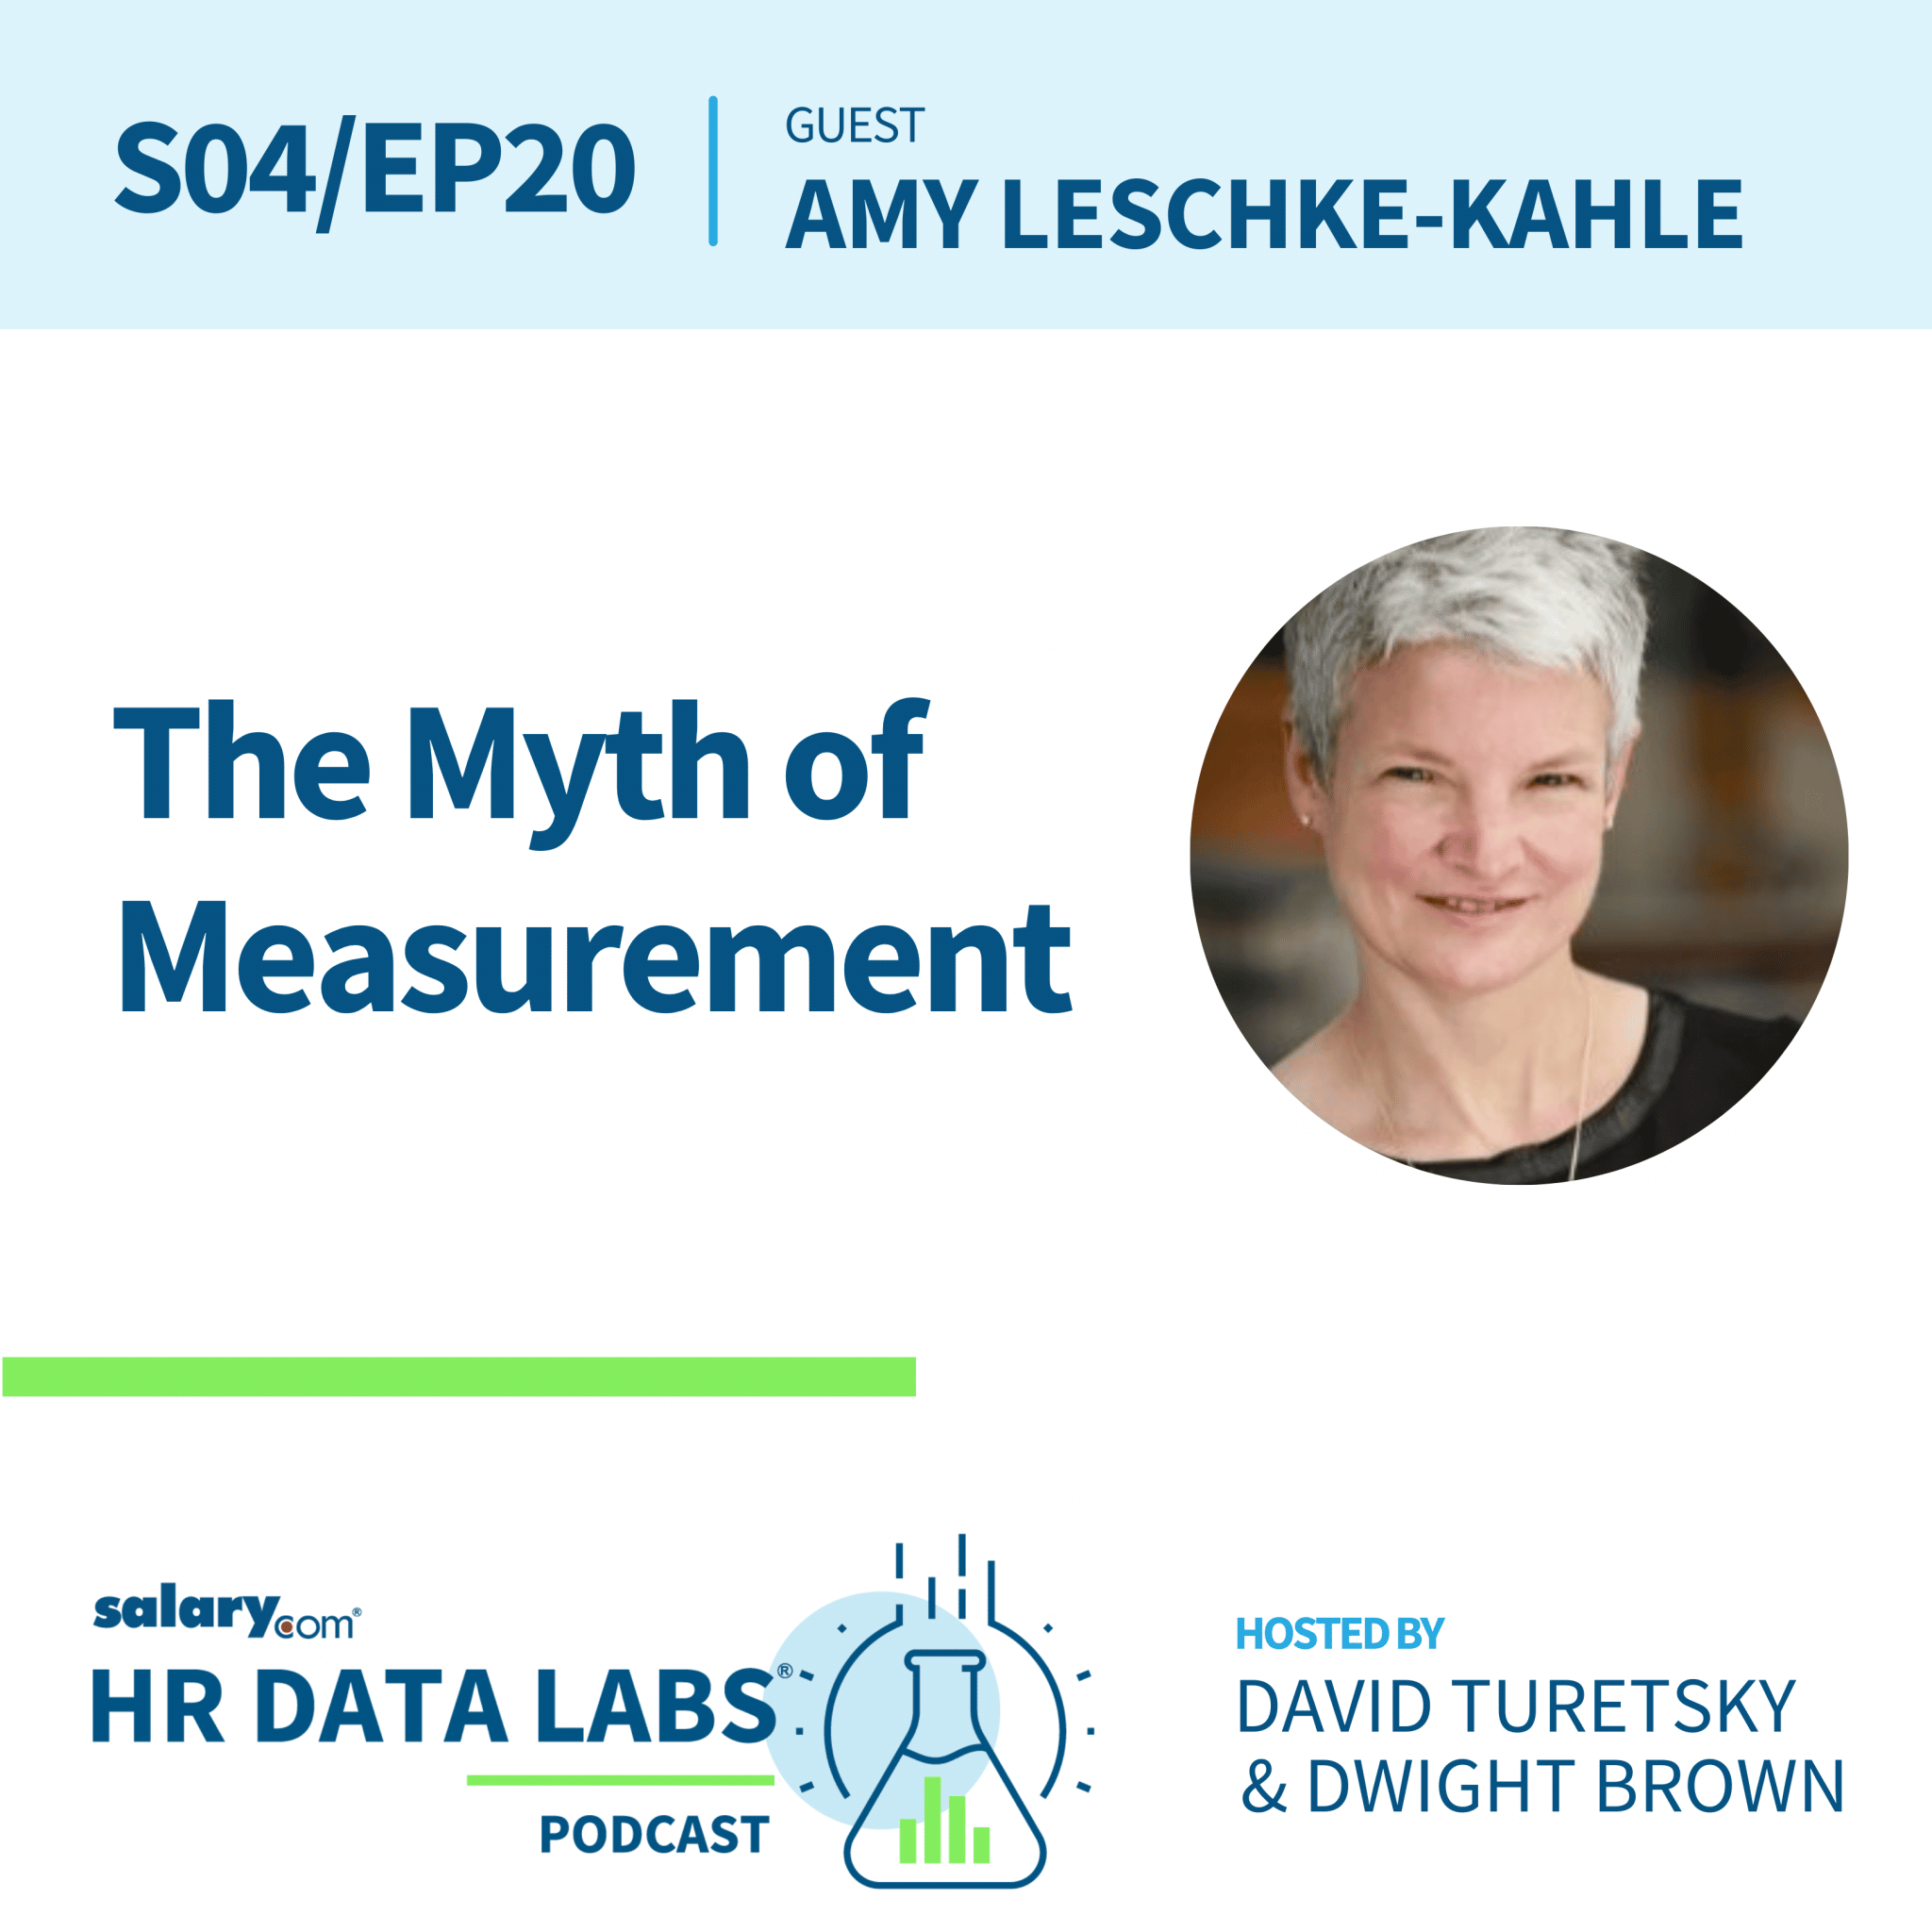 Amy Leschke-Kahle – The Myth of Measurement